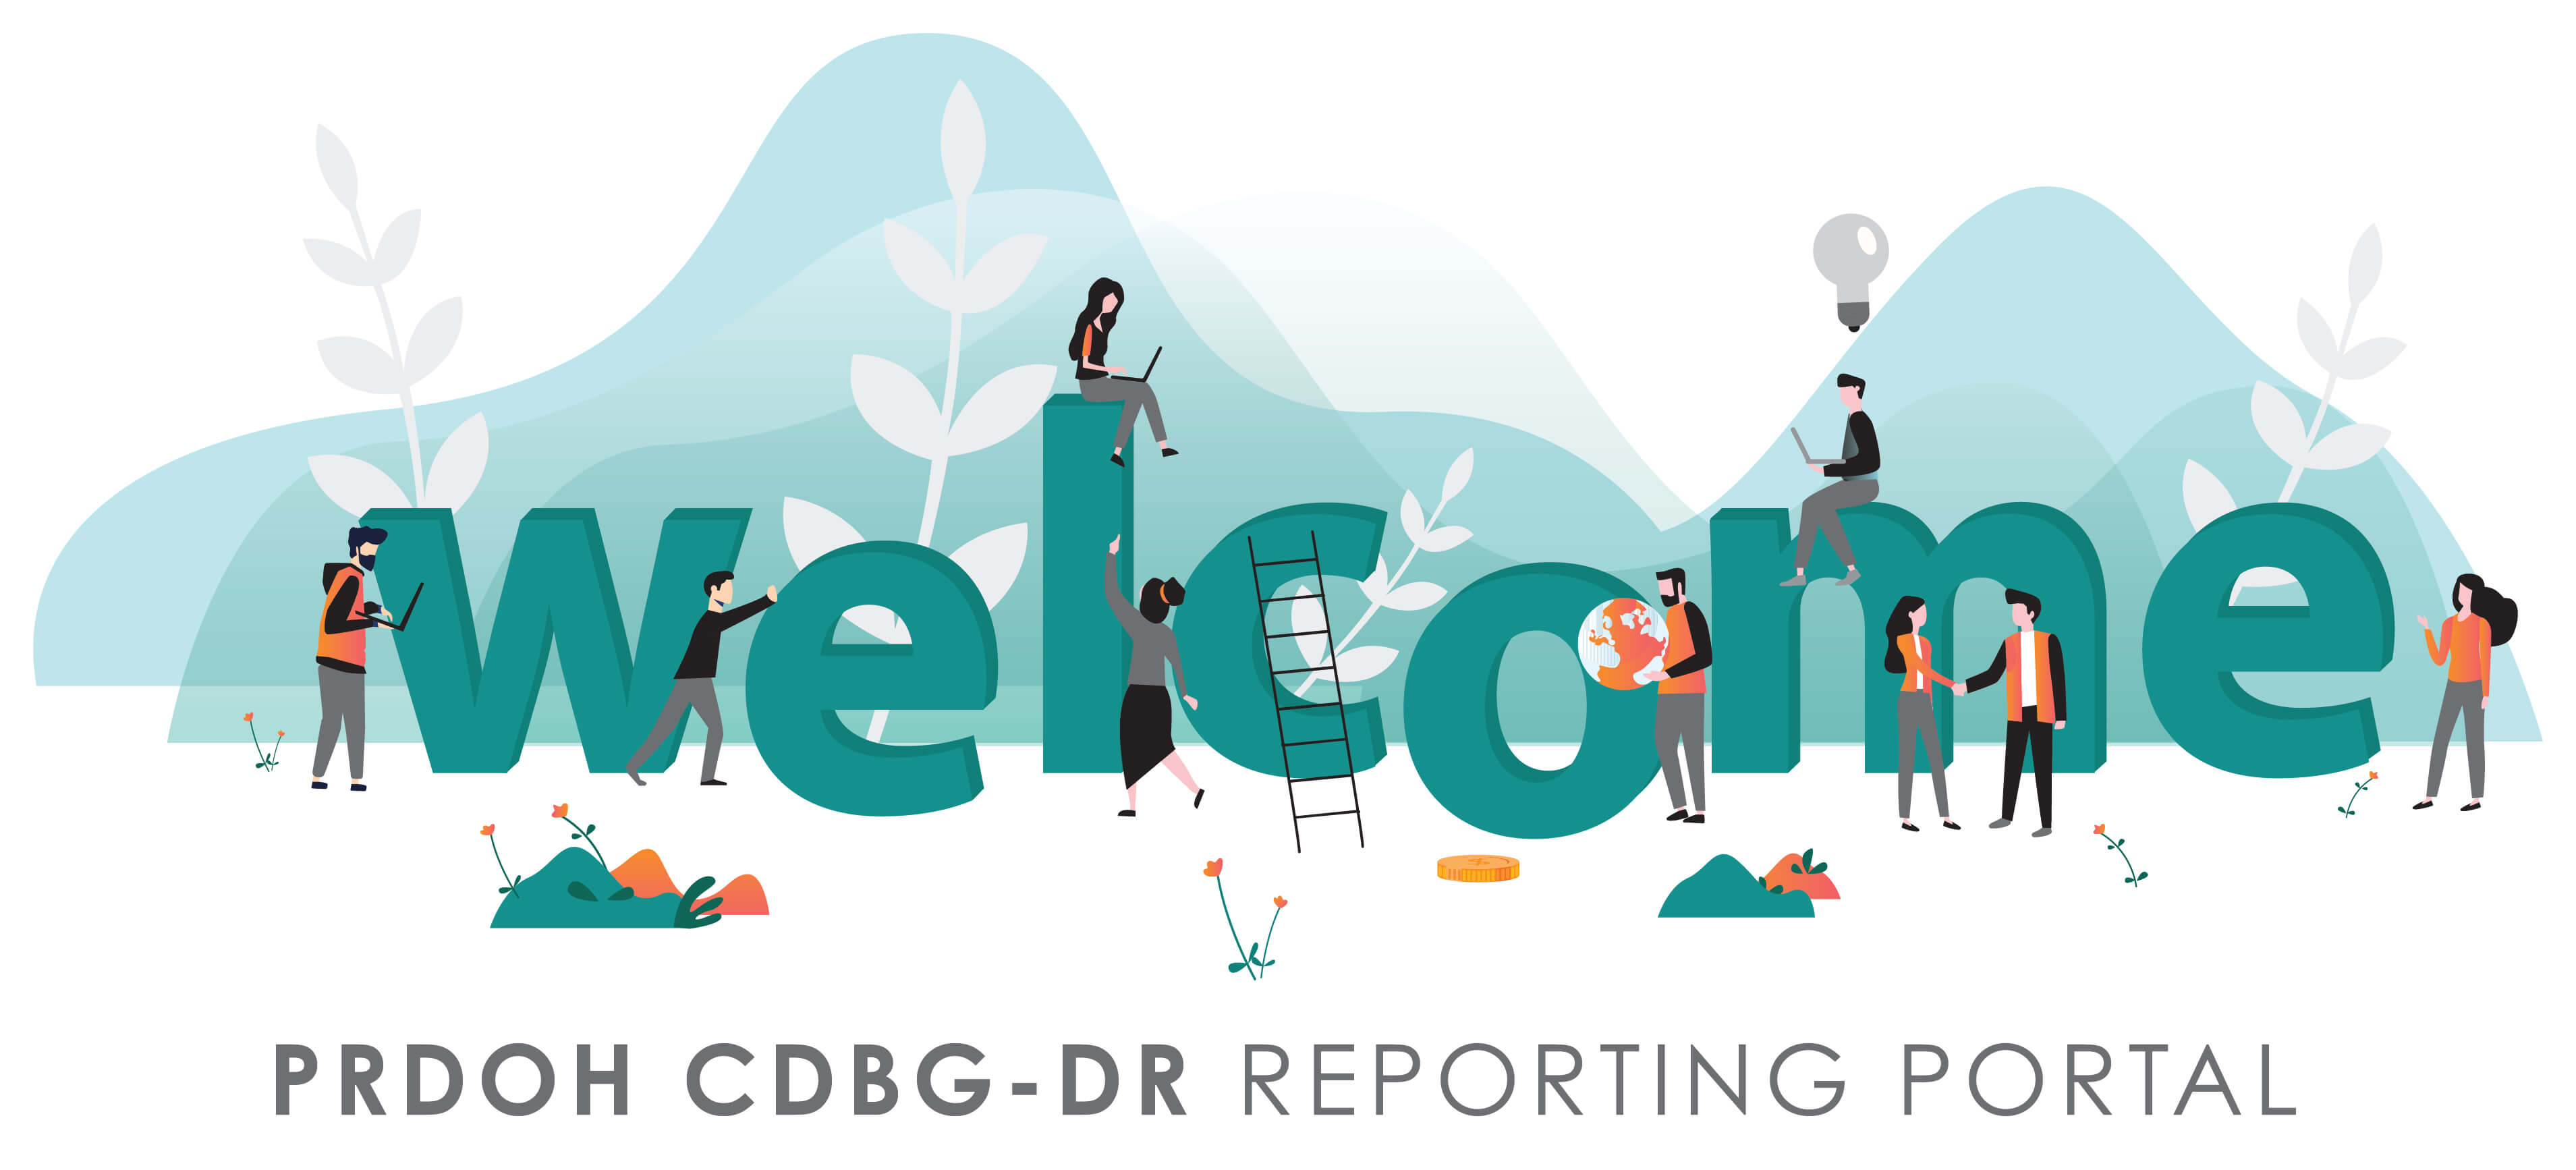 cdbg-dr-reporting-portal